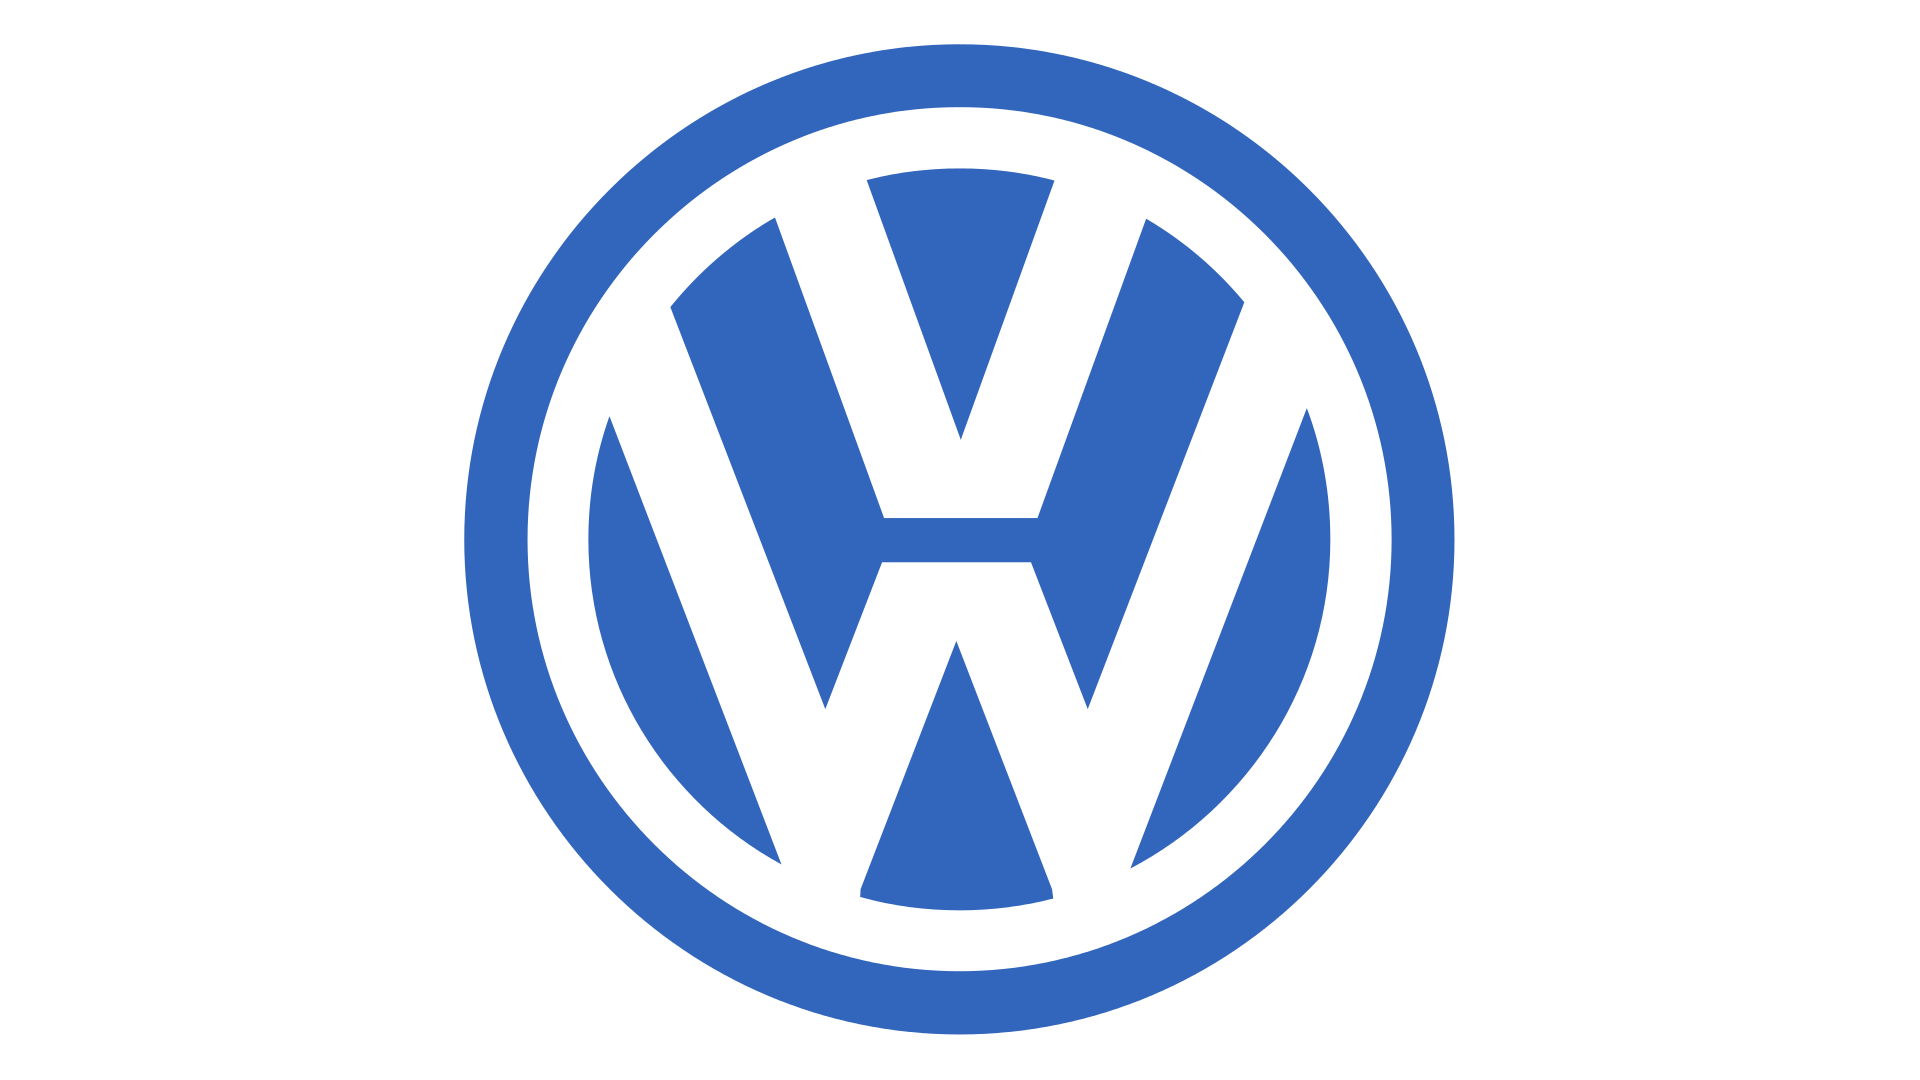 Volkswagen Long Biên